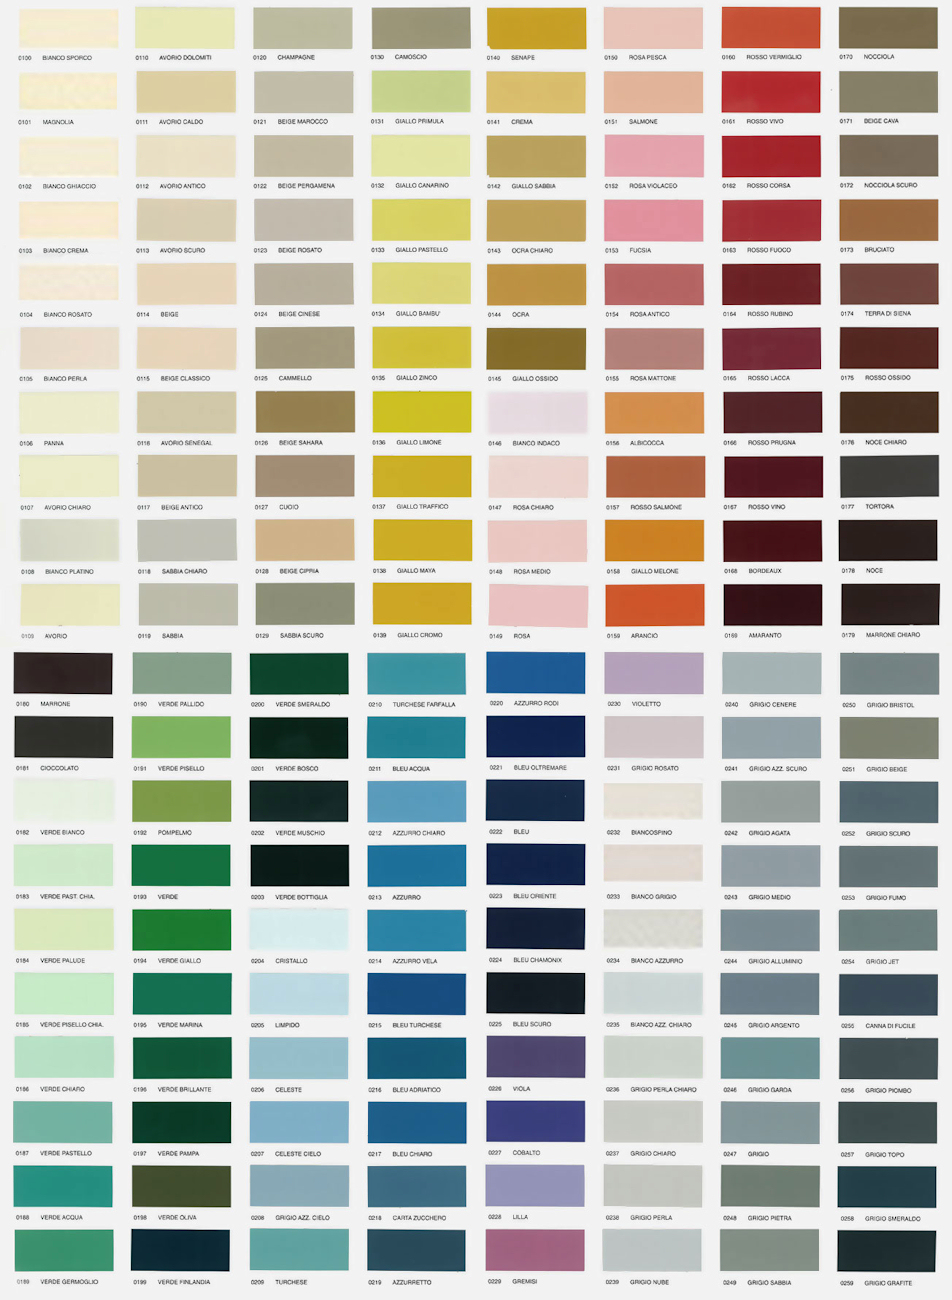 https://alumprofile.com/wp-content/uploads/2014/07/ICA_color_chart_jpg1.jpg